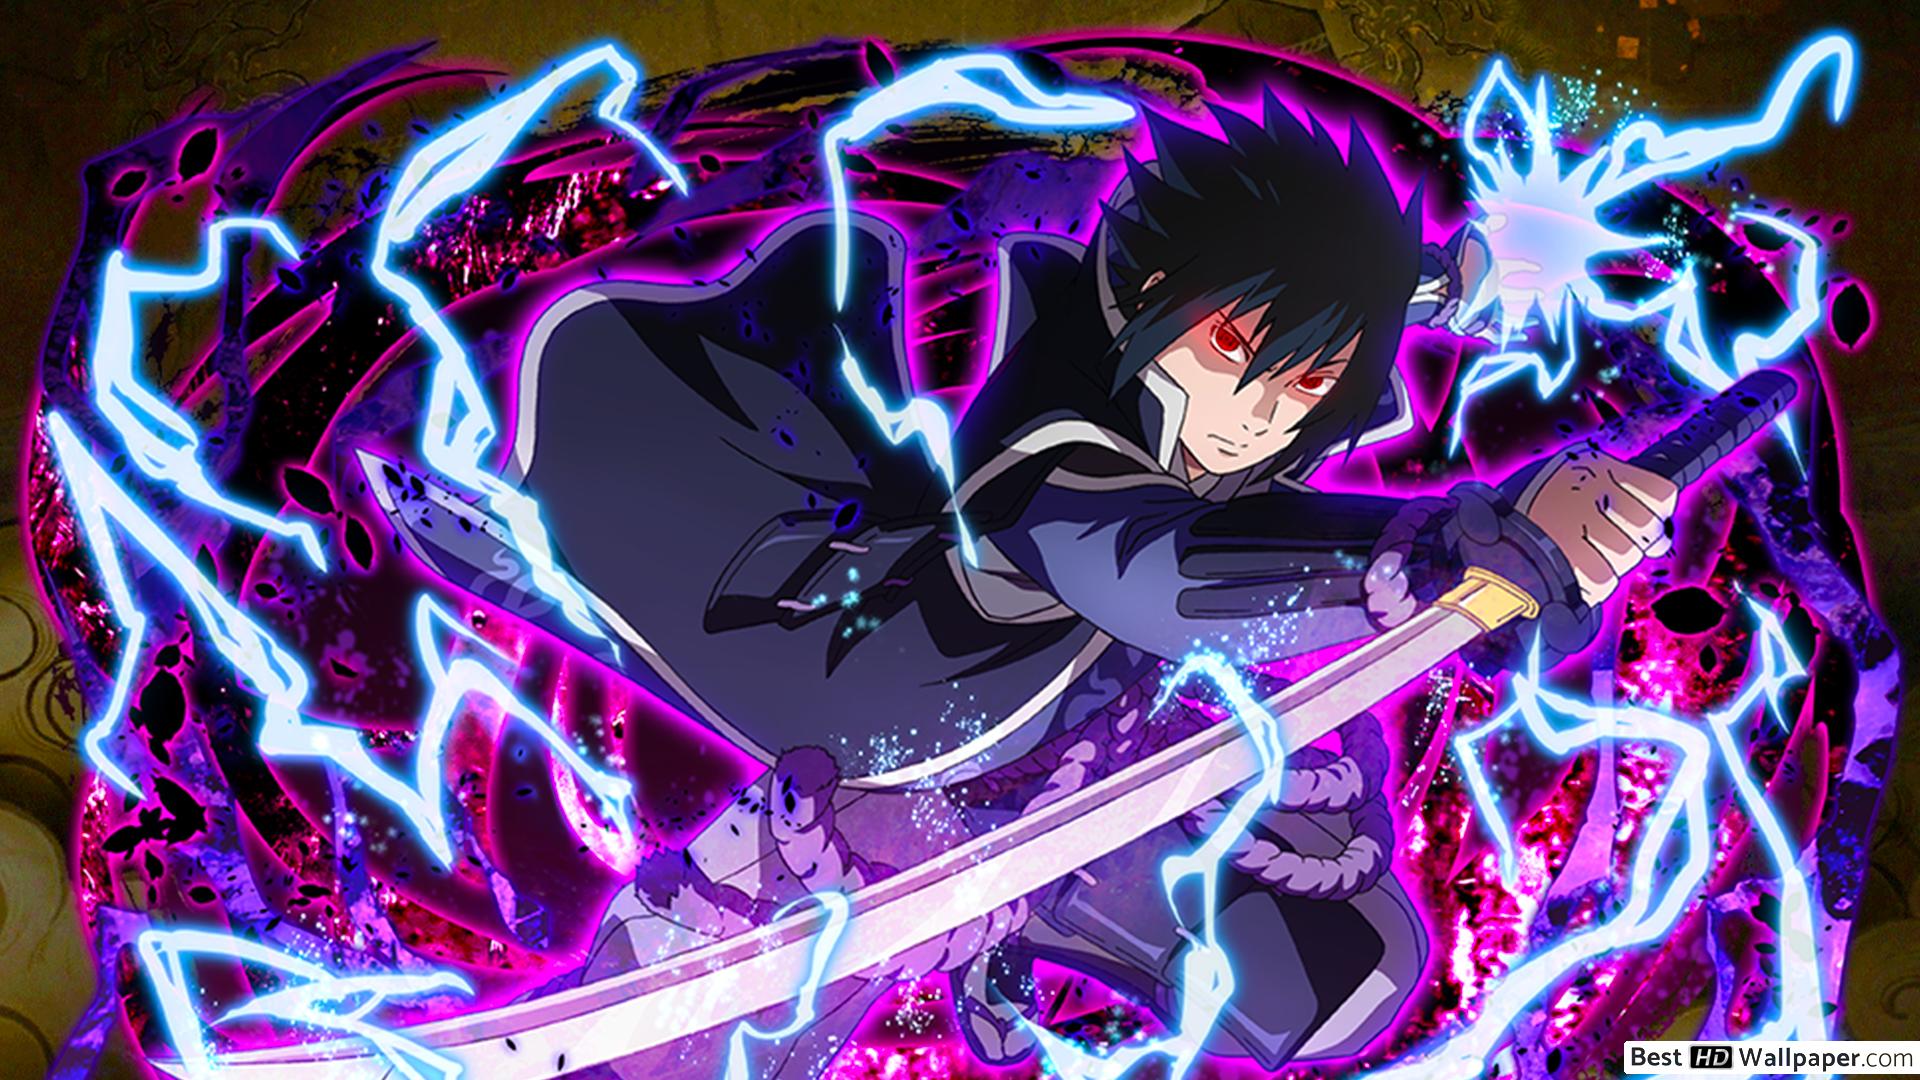 Sasuke Uchiha Lightning Blade from Naruto Shippuden for Desktop HD wallpaper download